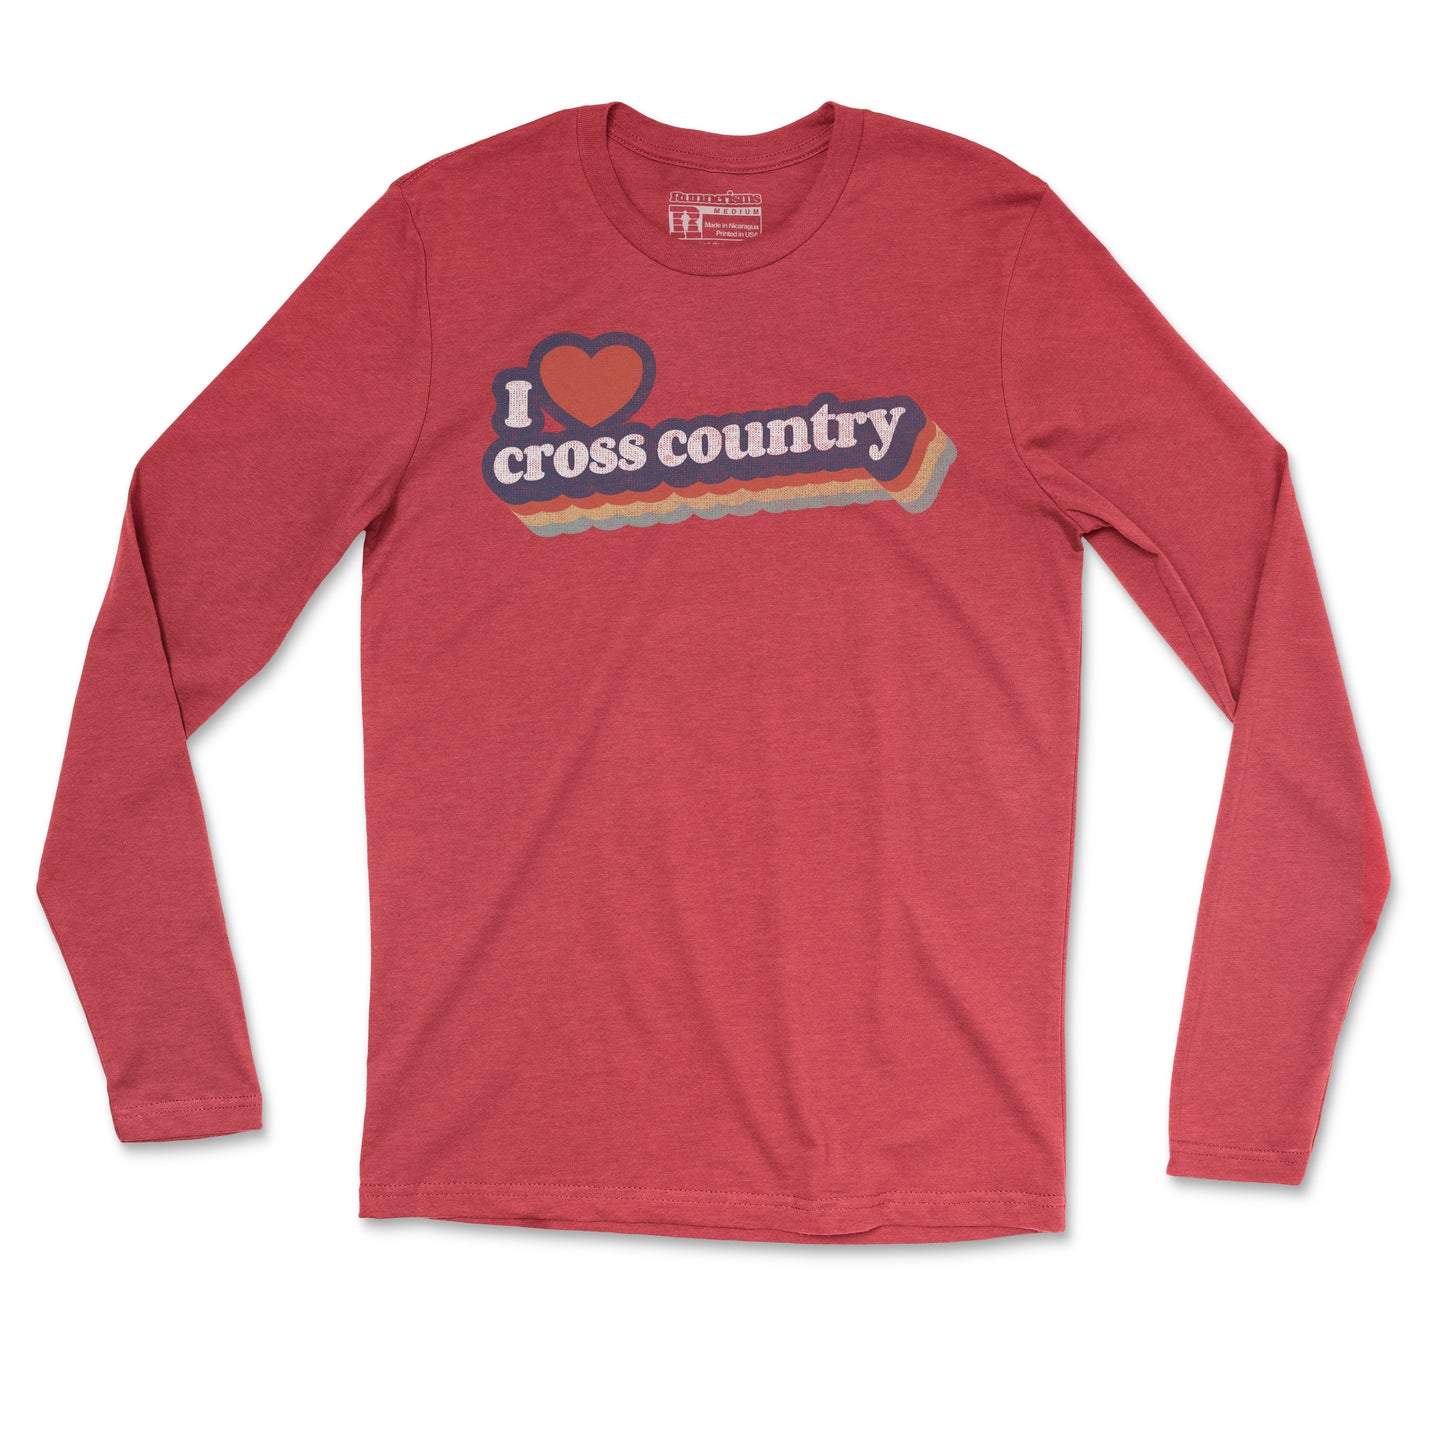 I Love Cross Country - Unisex Long Sleeve T Shirt